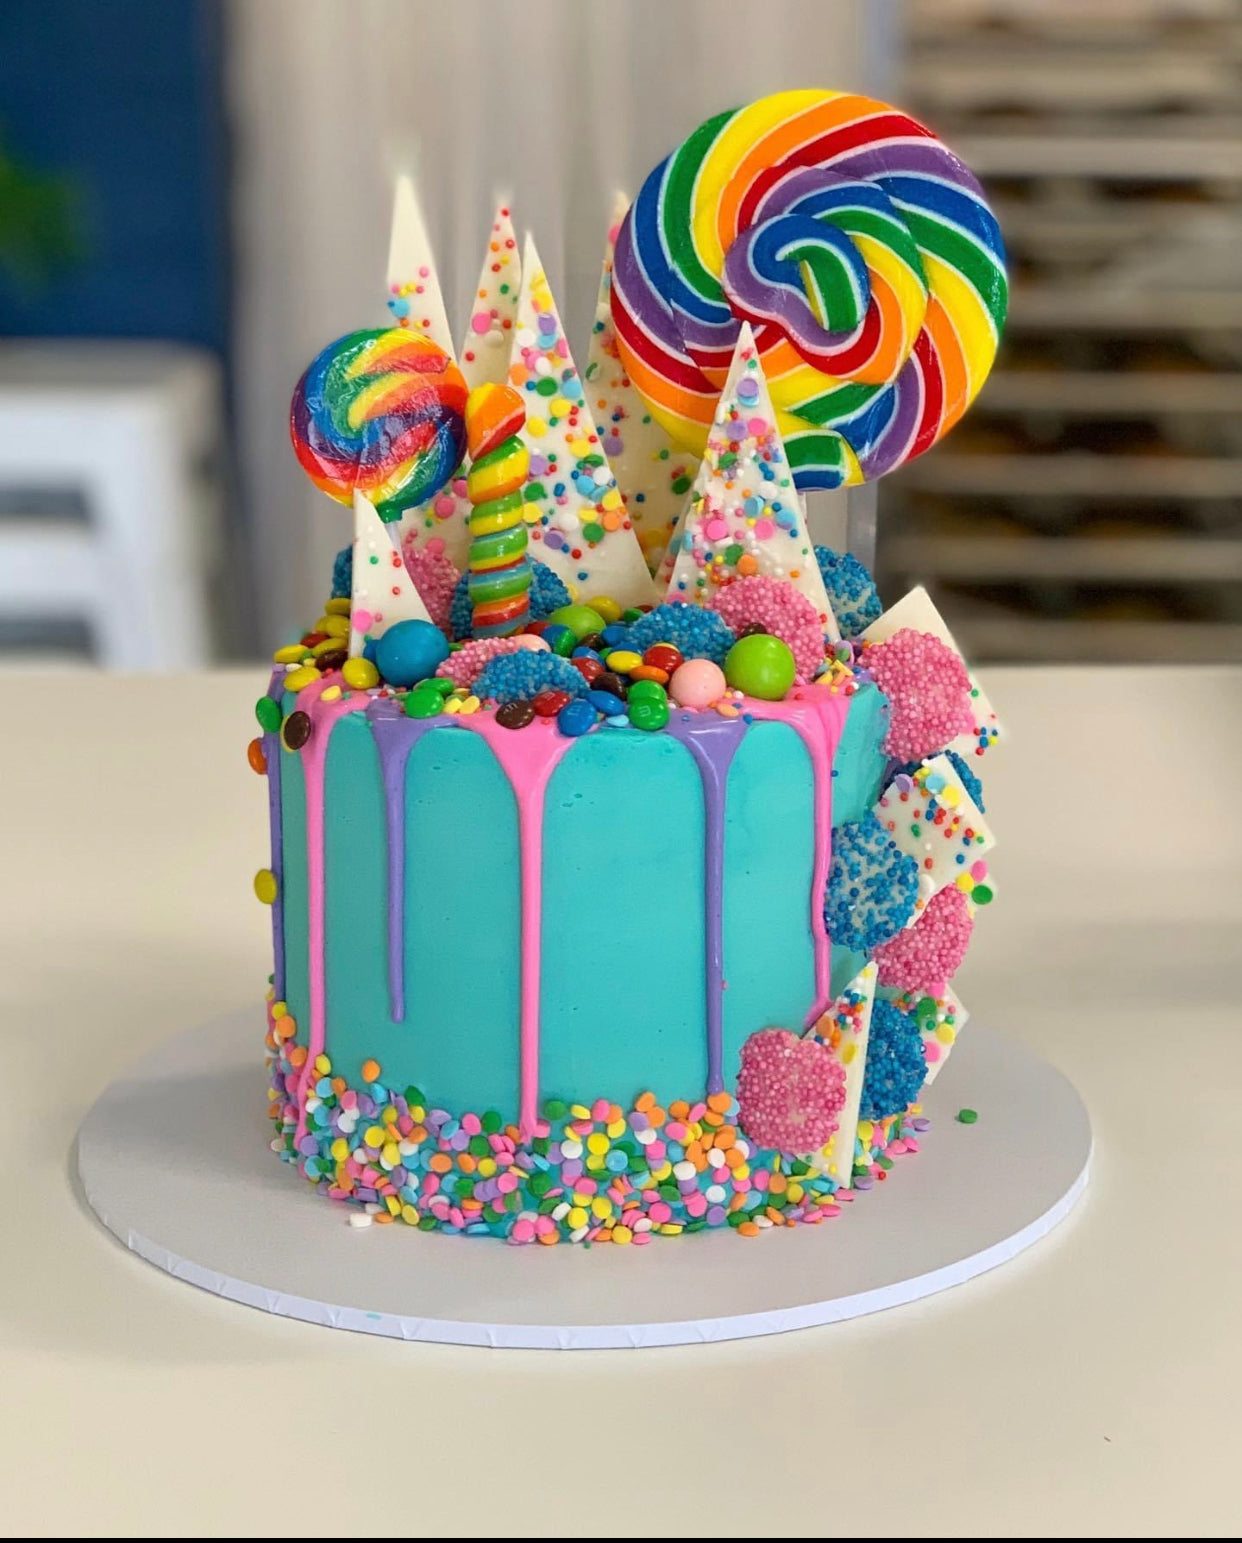 Premium Photo | Rainbow candy birthday cake for kid